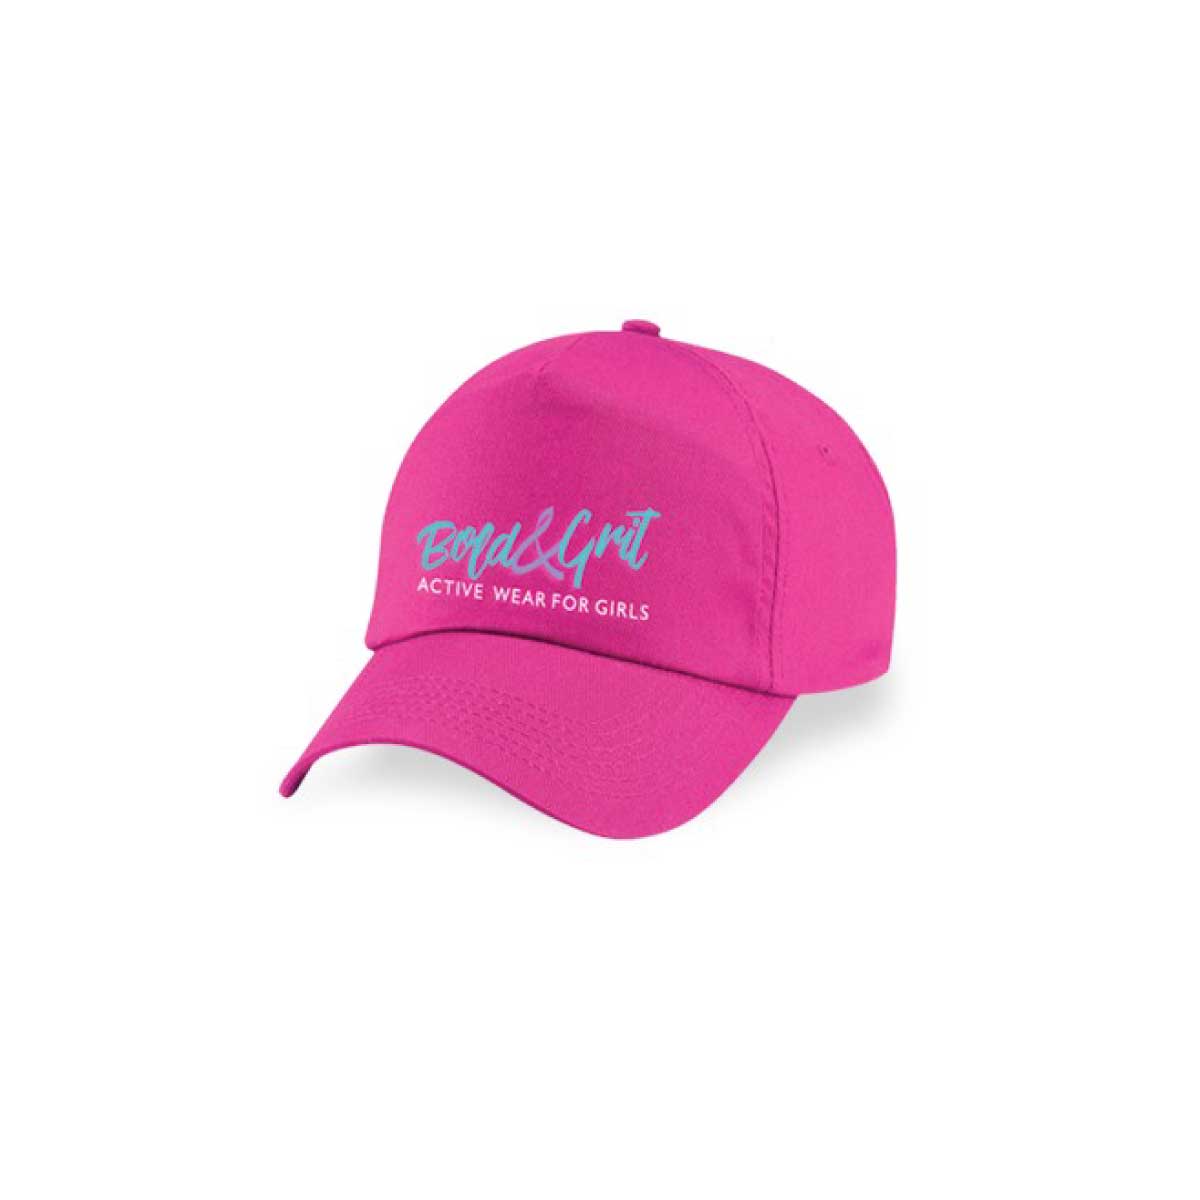 Bold&amp;grit pink cap